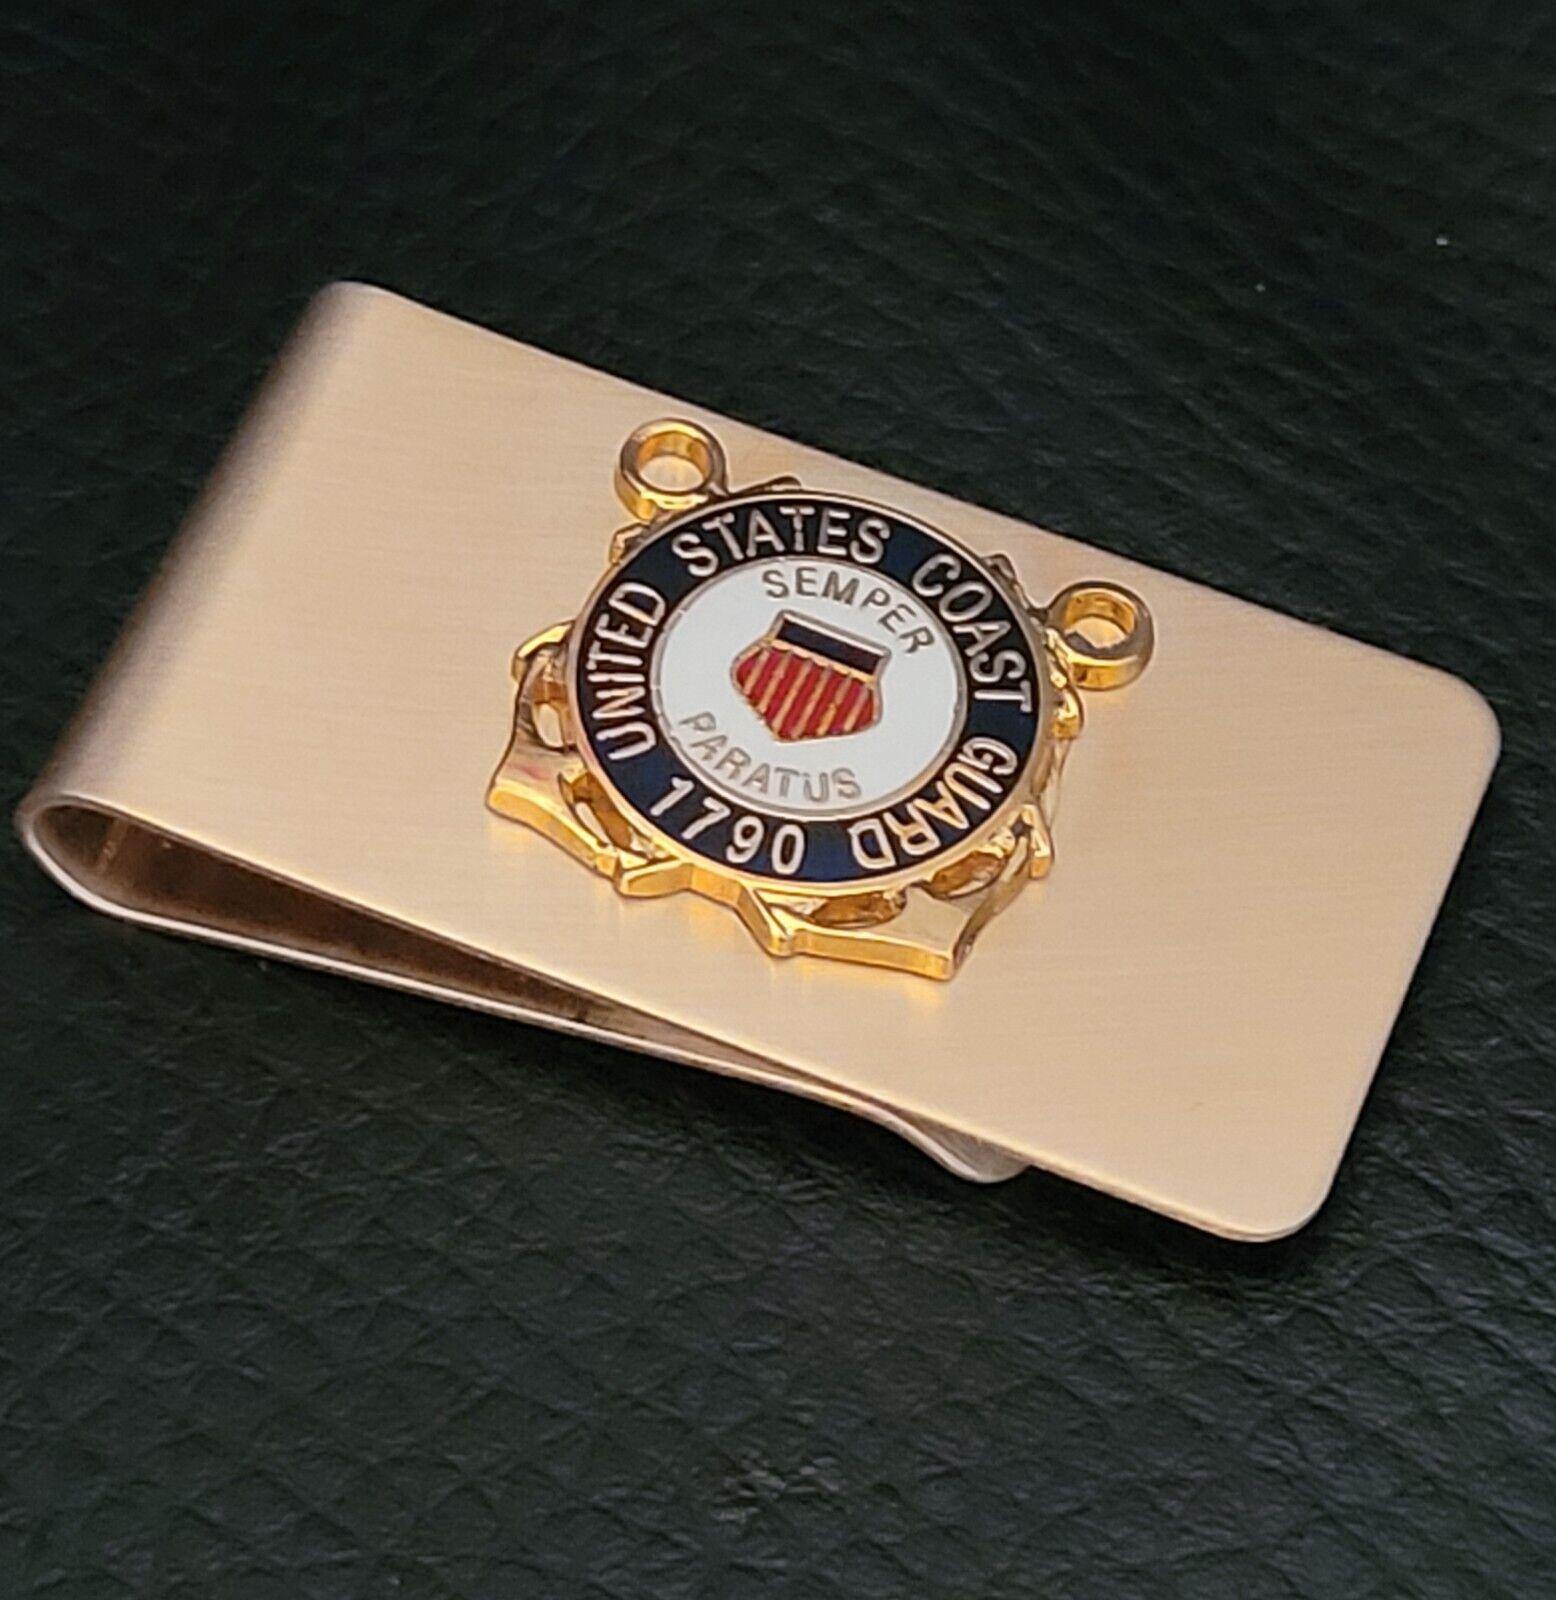 USCG US Coast Guard SEMPER PARATUS 1790 Badge Insignia MONEY CLIP